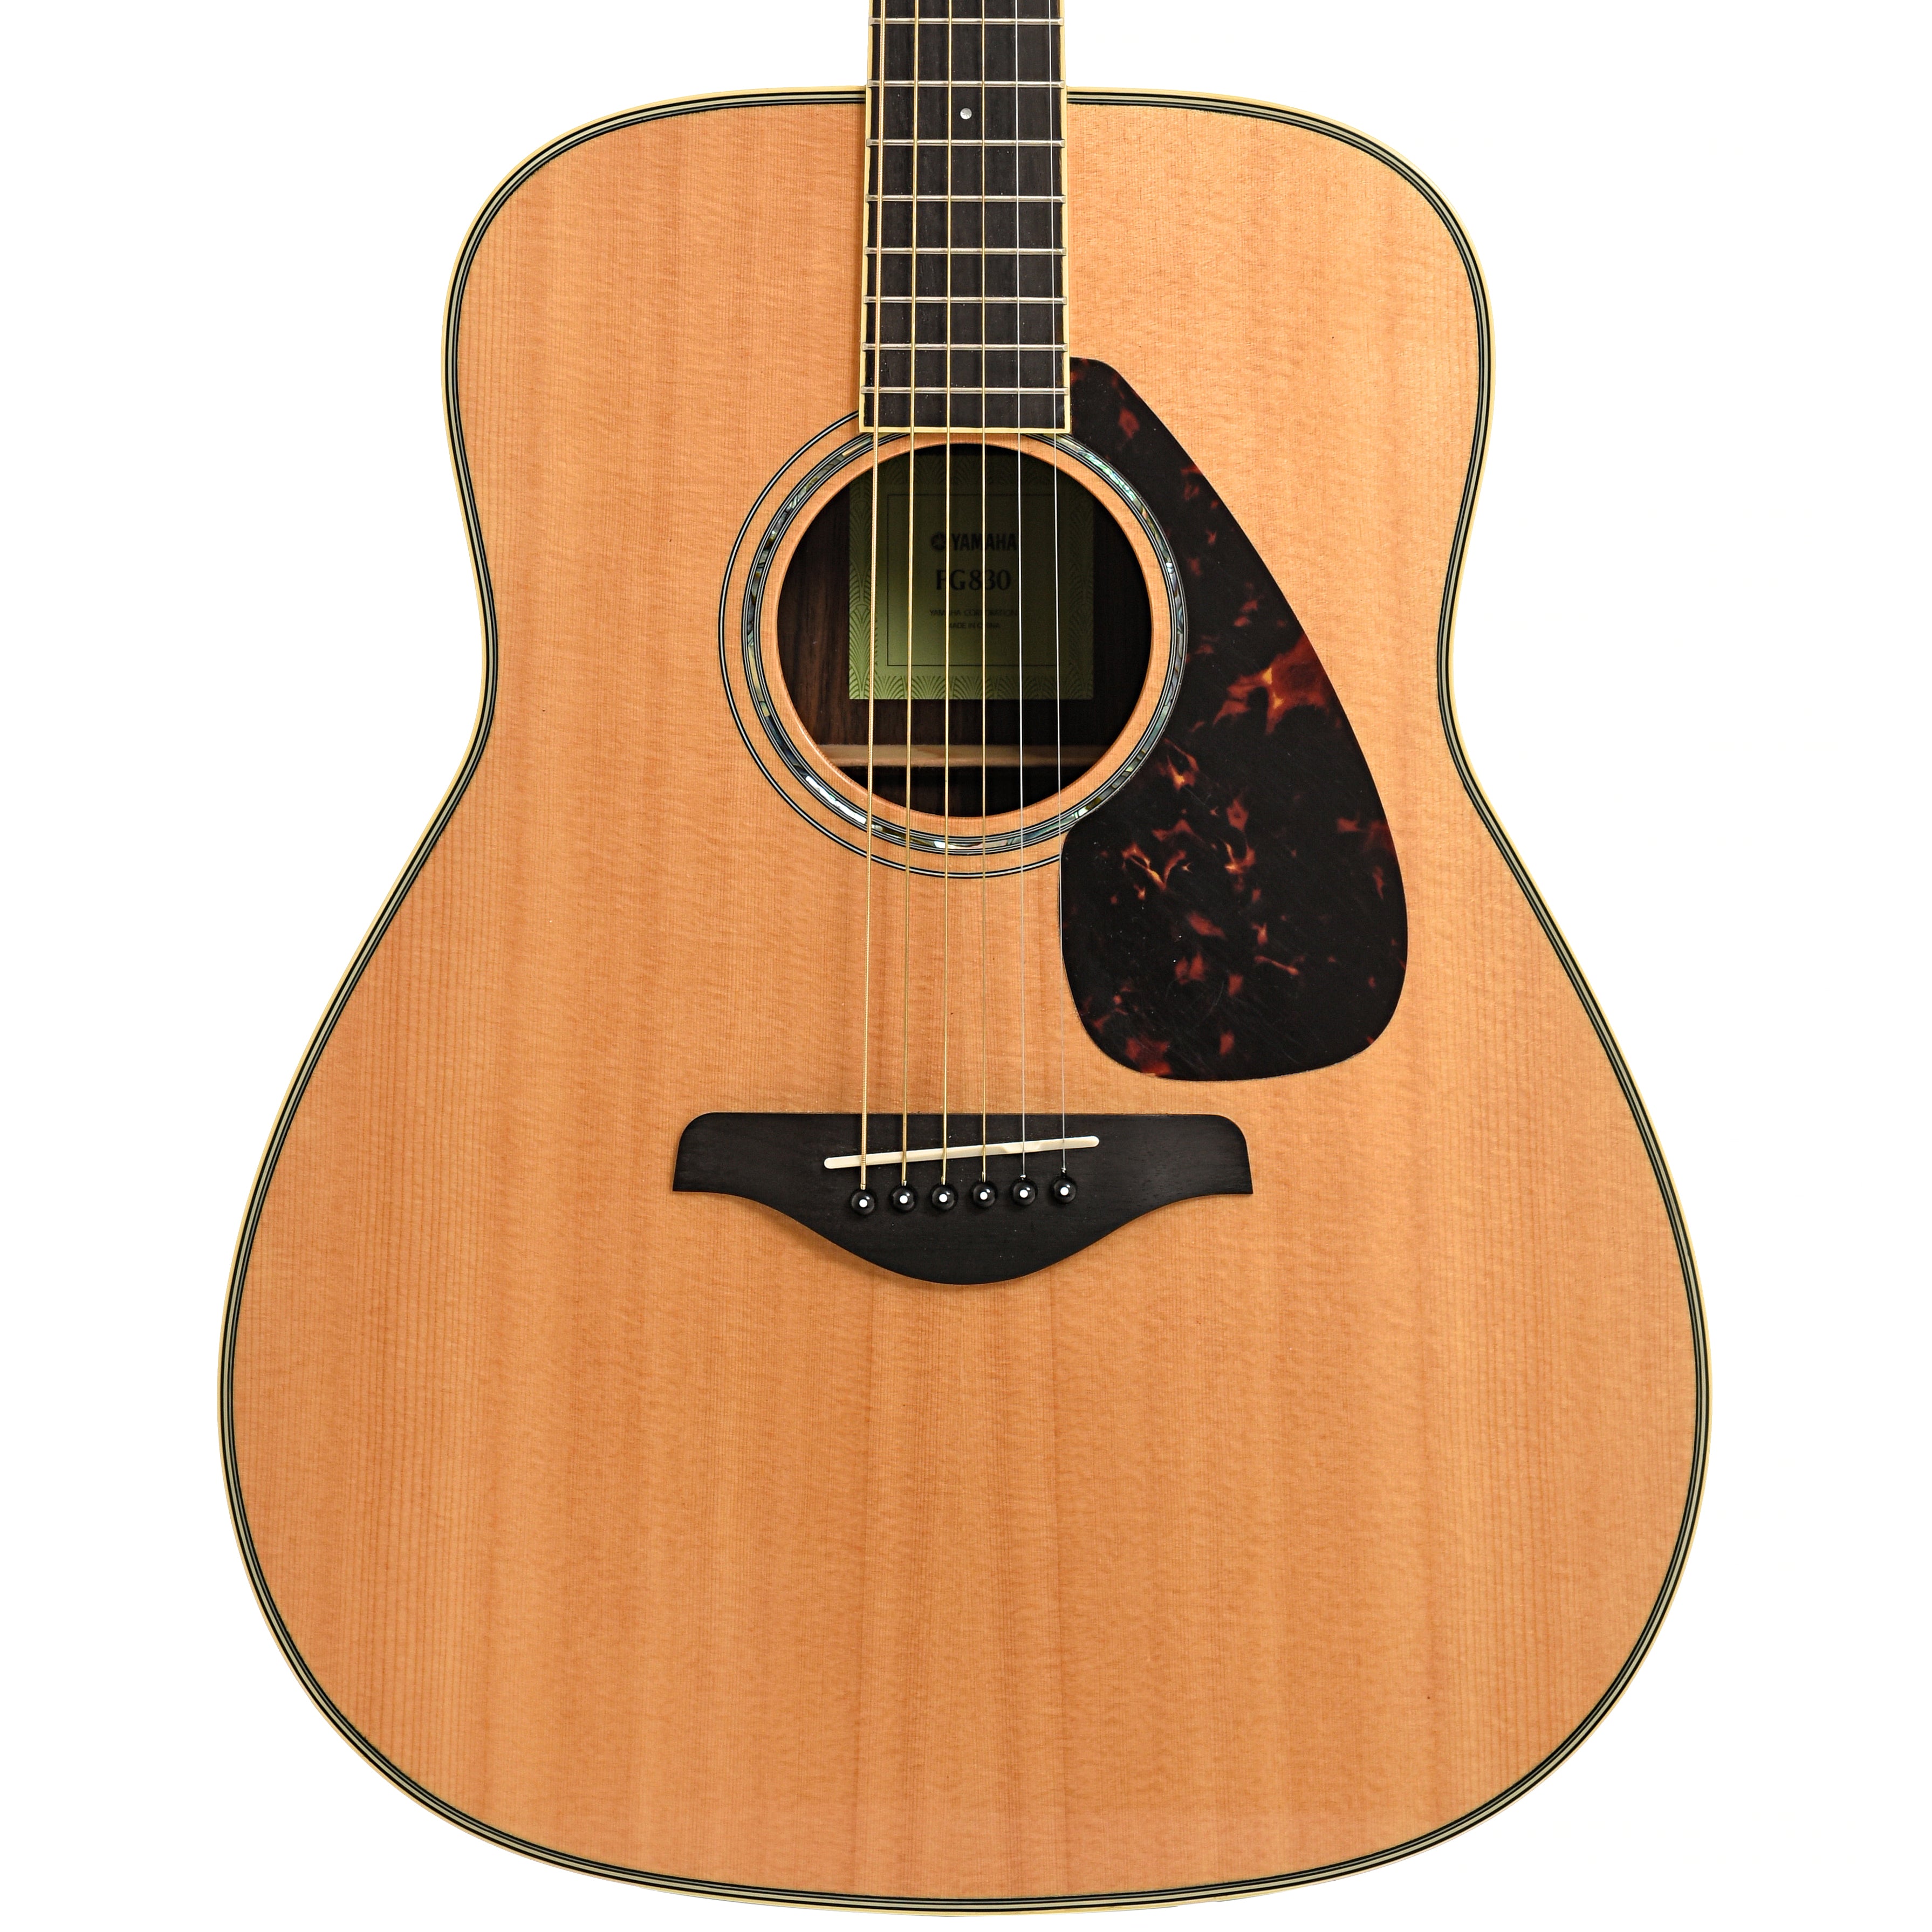 Yamaha FG830 Acoustic Guitar (2018) – Elderly Instruments